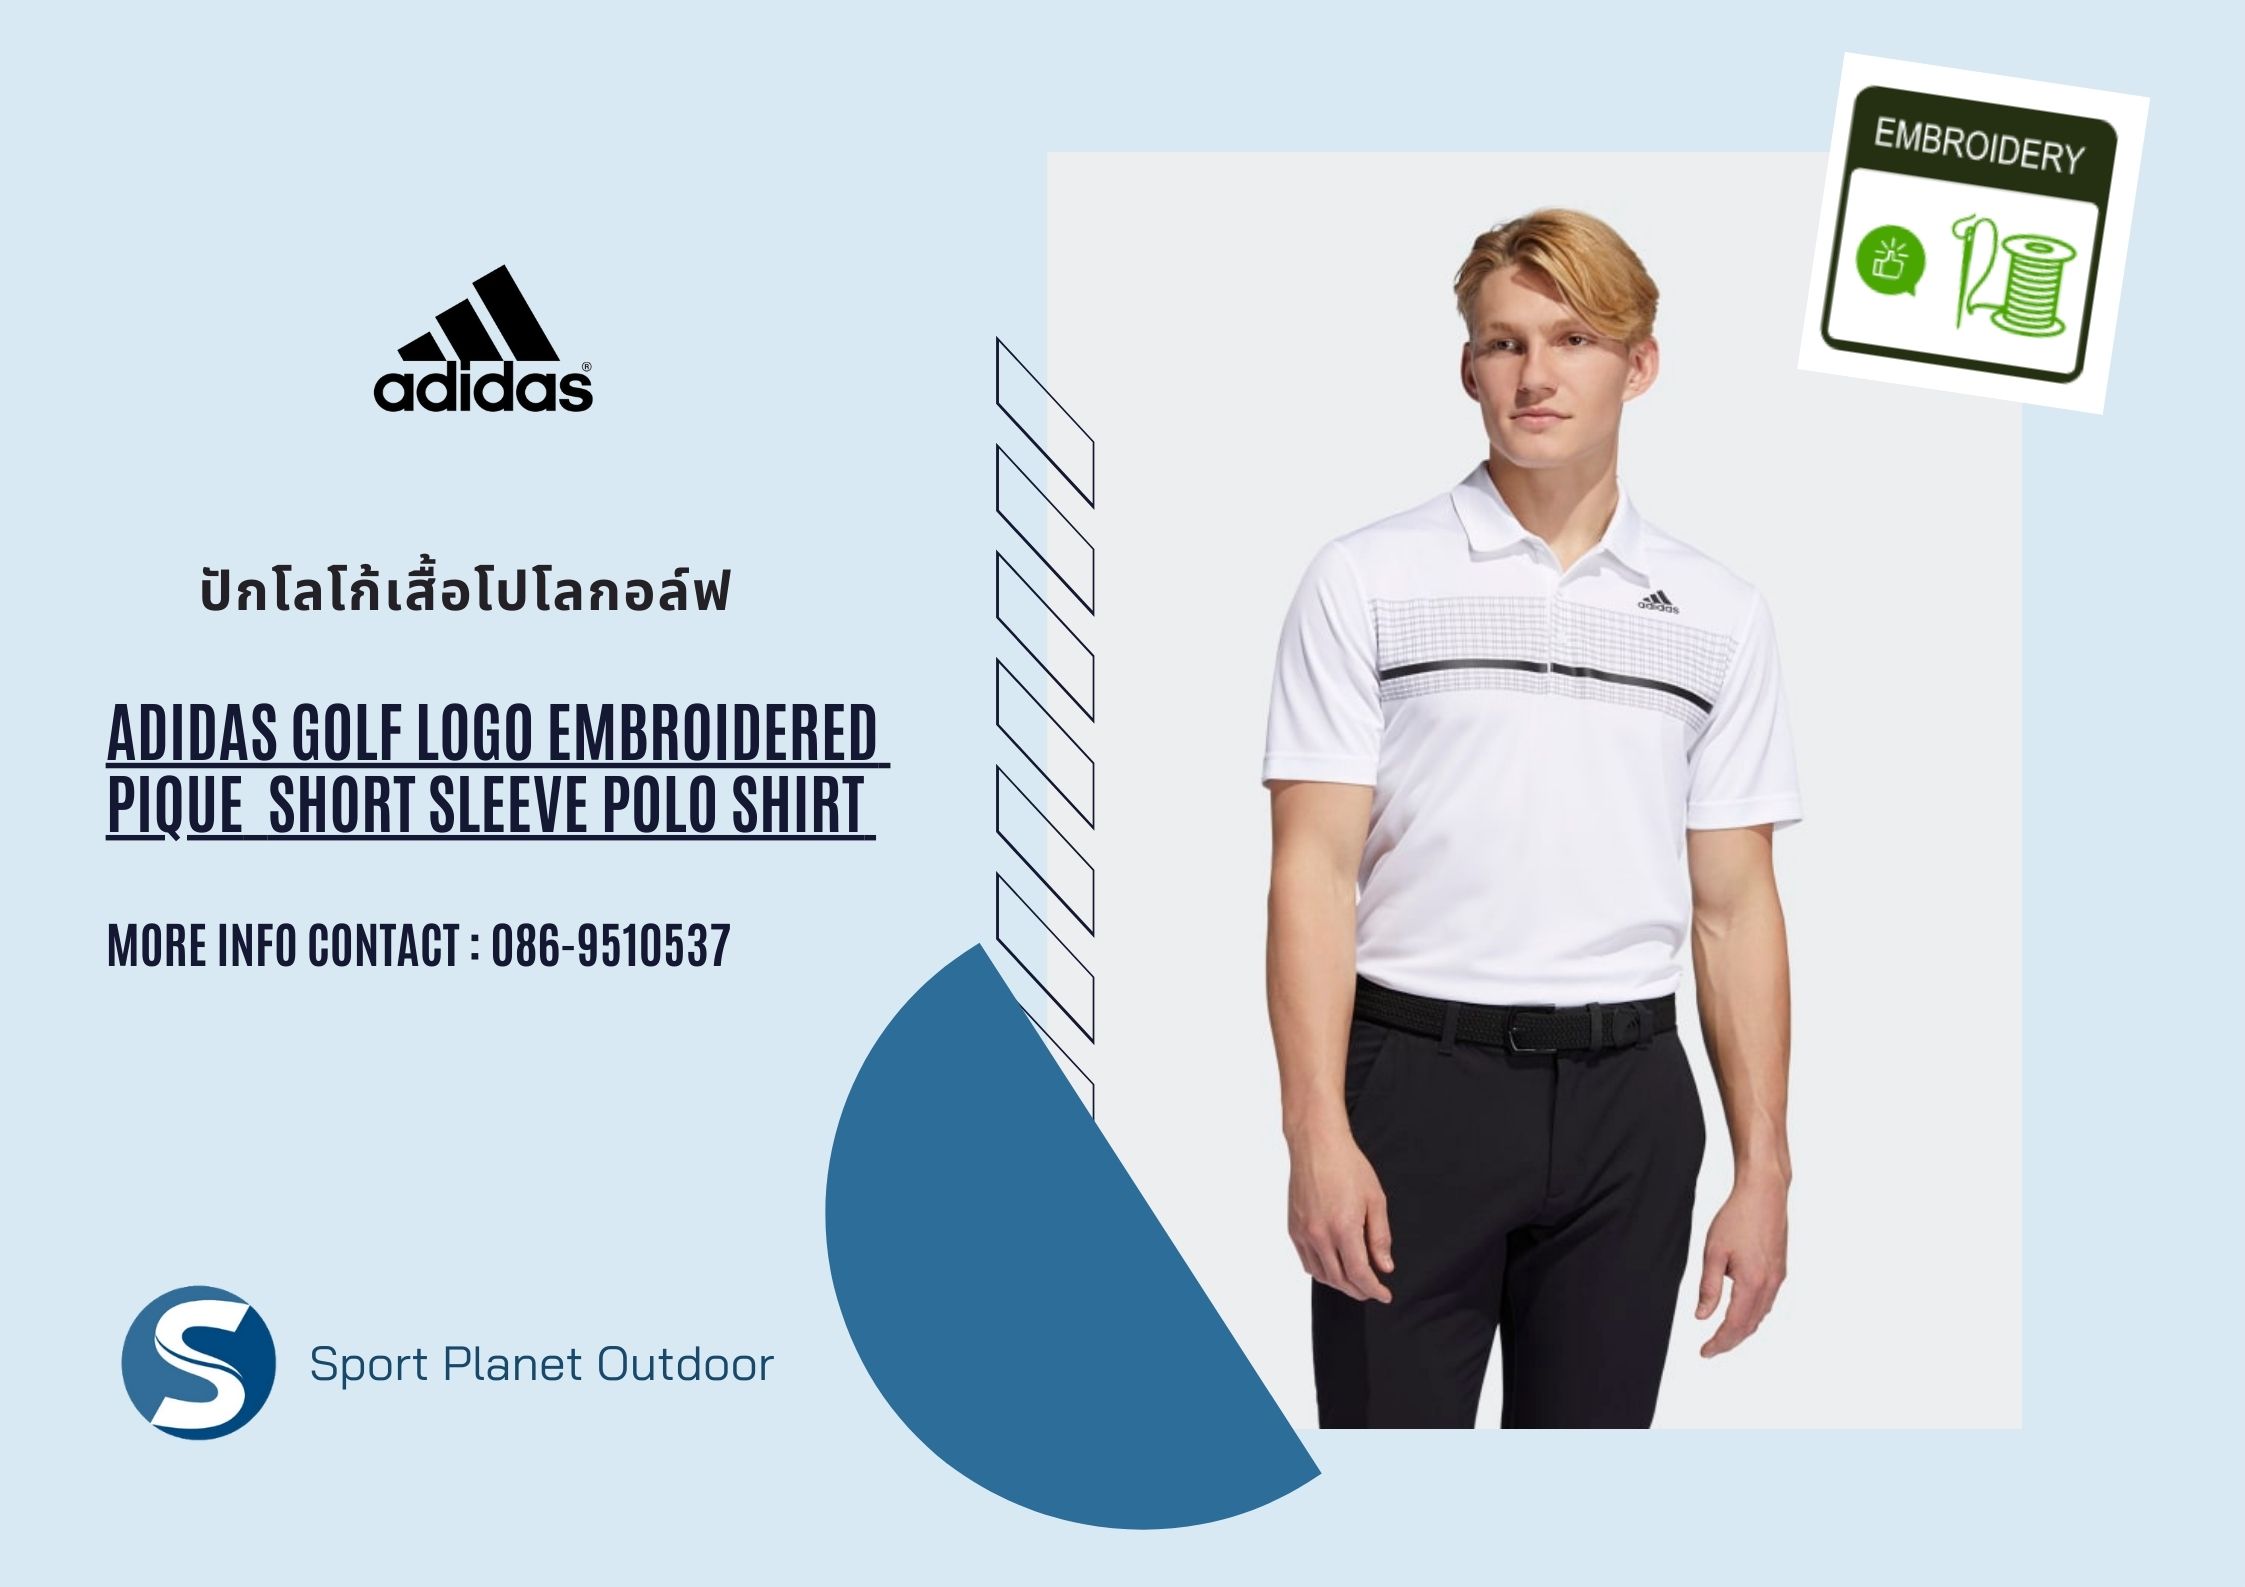 Images/Blog/7648848-Adidas Golf Logo Embroidered Pique Short Sleeve Polo Shirt - For Men.jpg